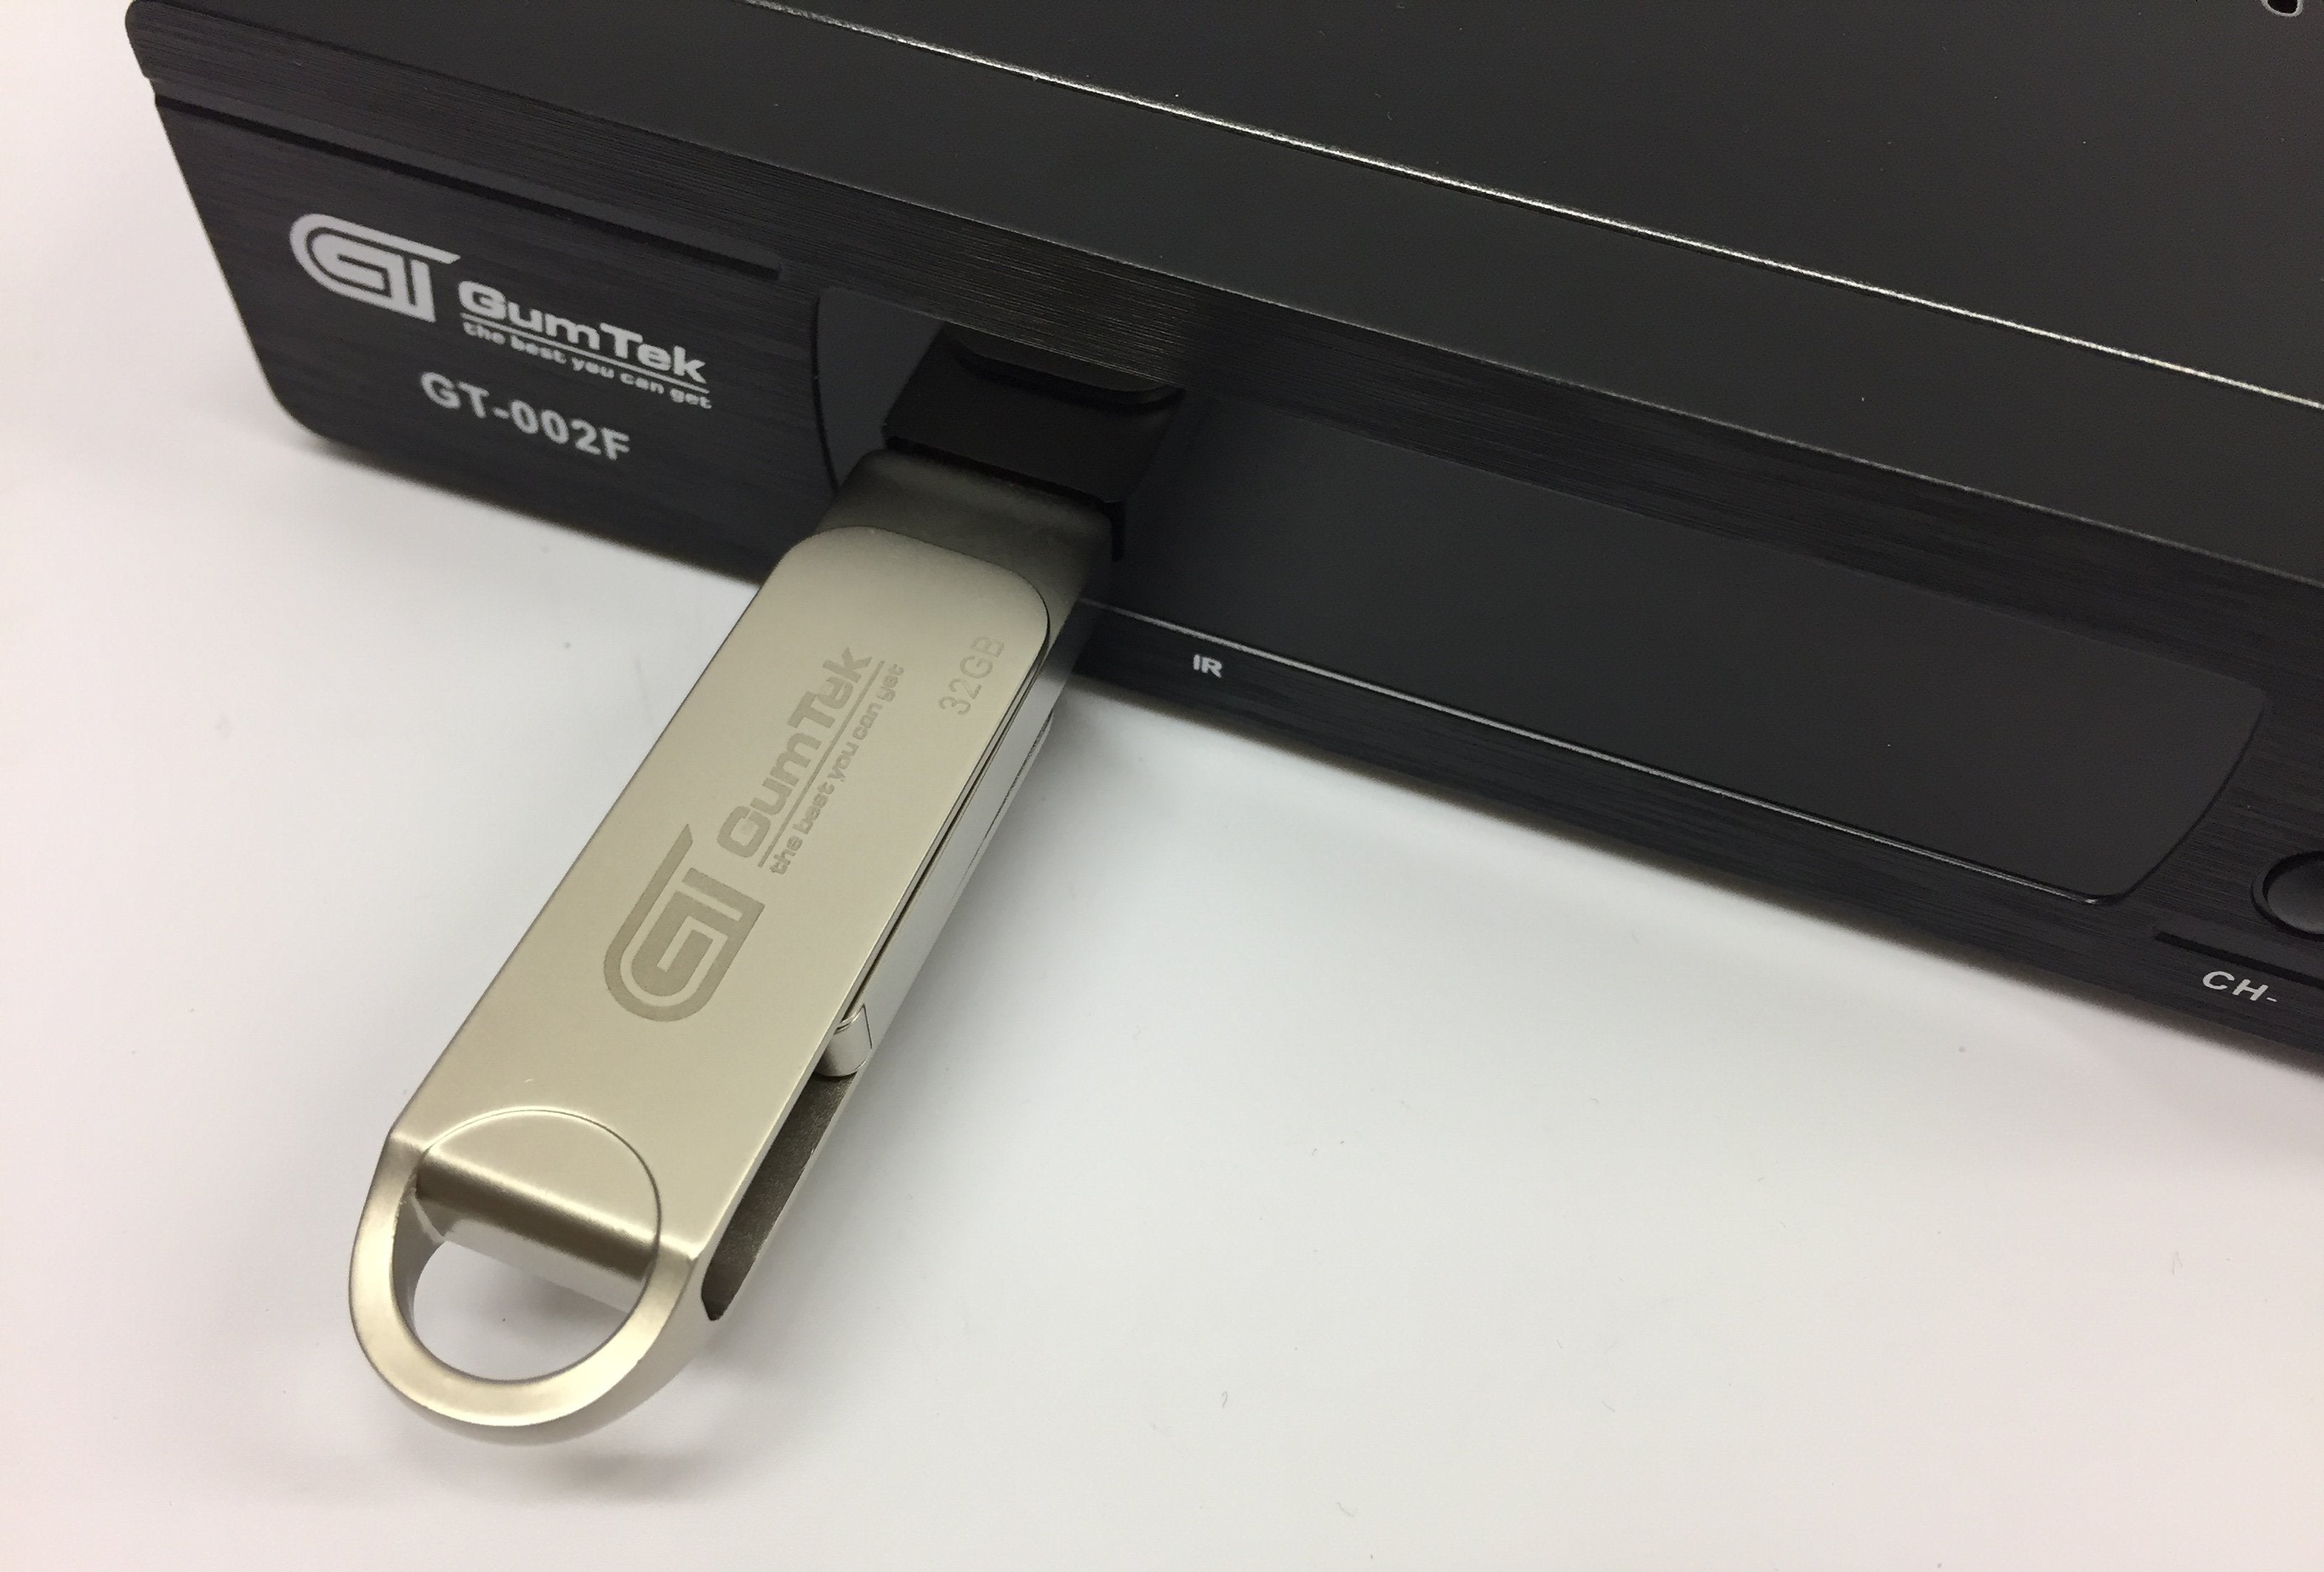 Gumtek USB 3.0 Flash Drive